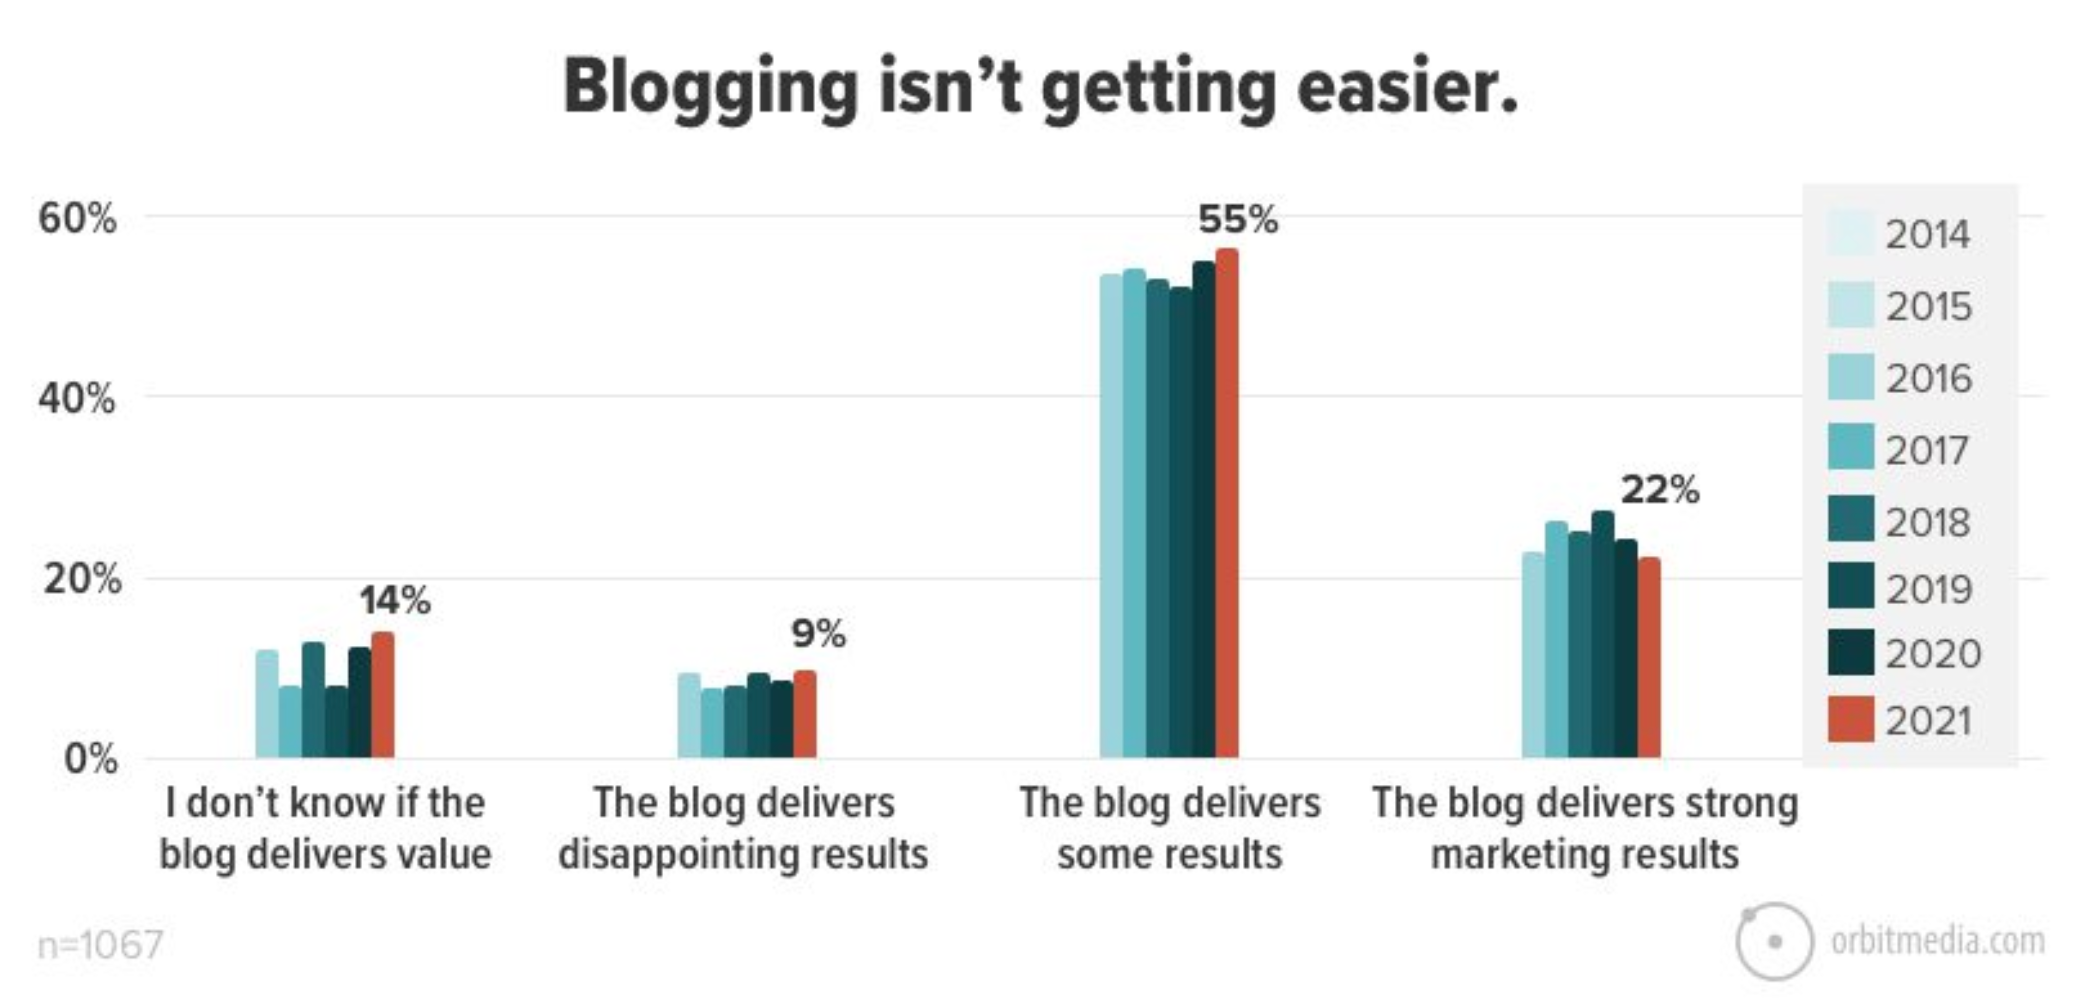 Blogging Isn't Getting Easier